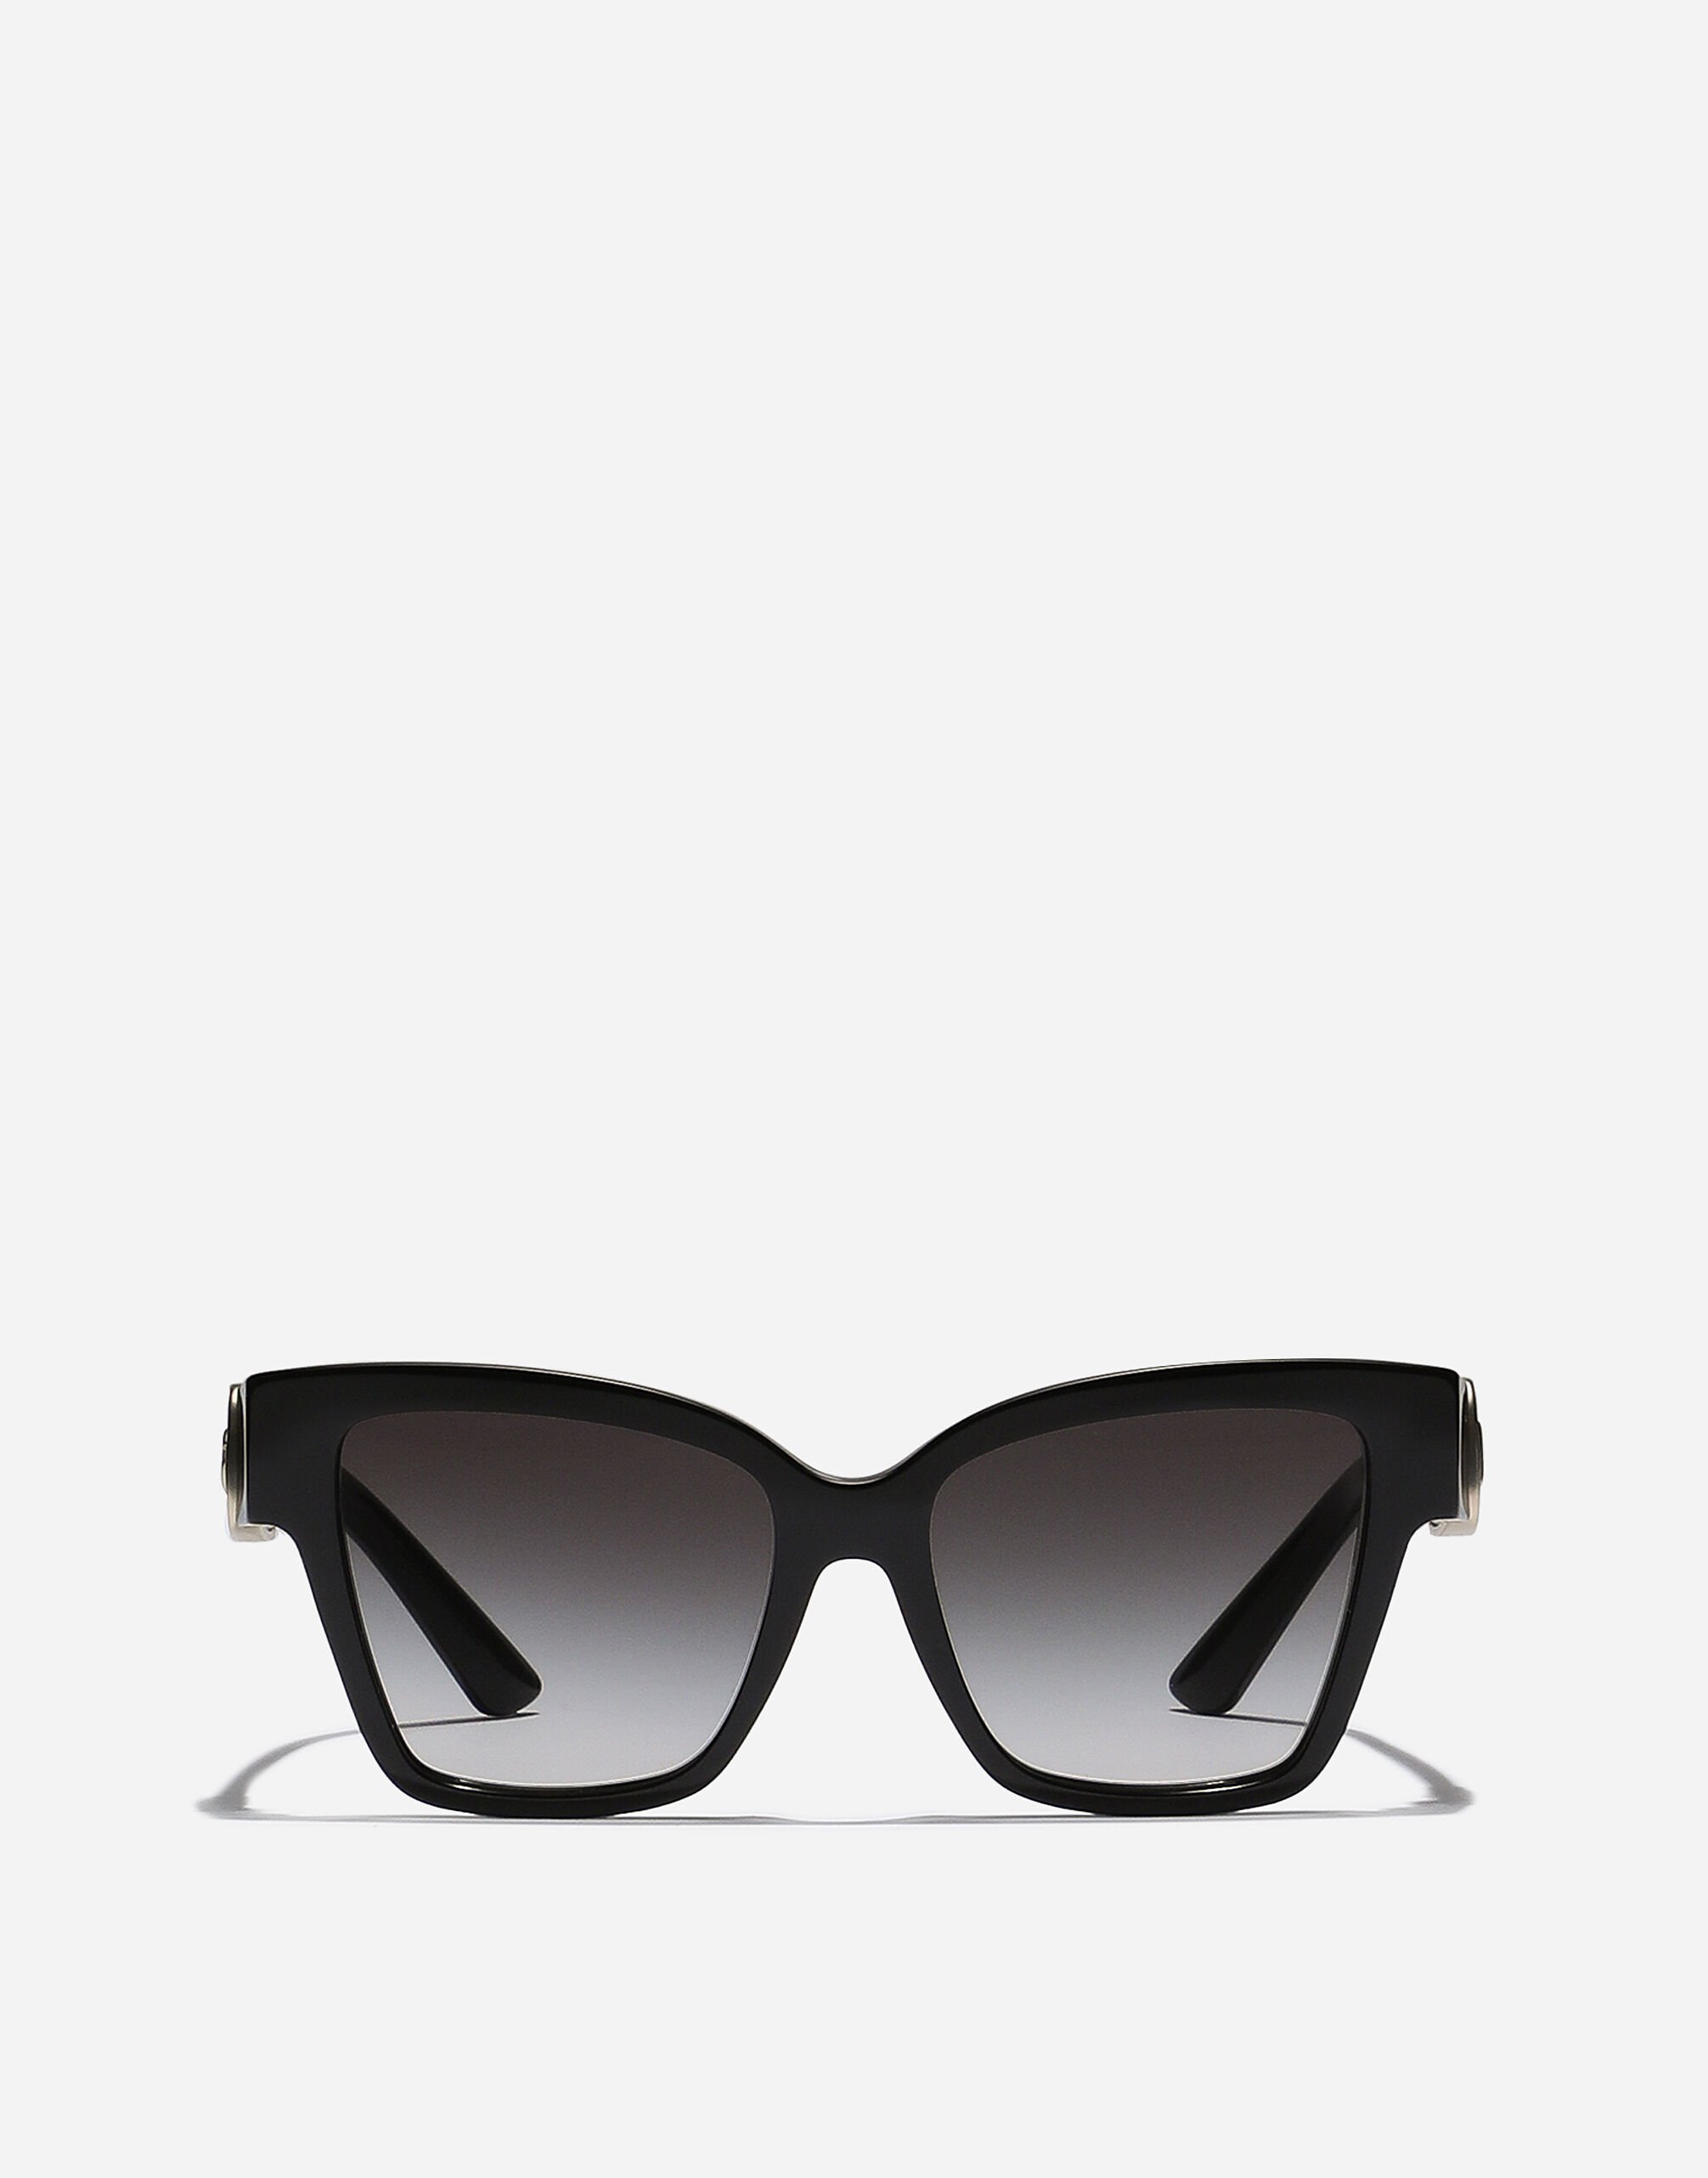 Women's sunglasses: cat eye, floral, square | Dolce&Gabbana®